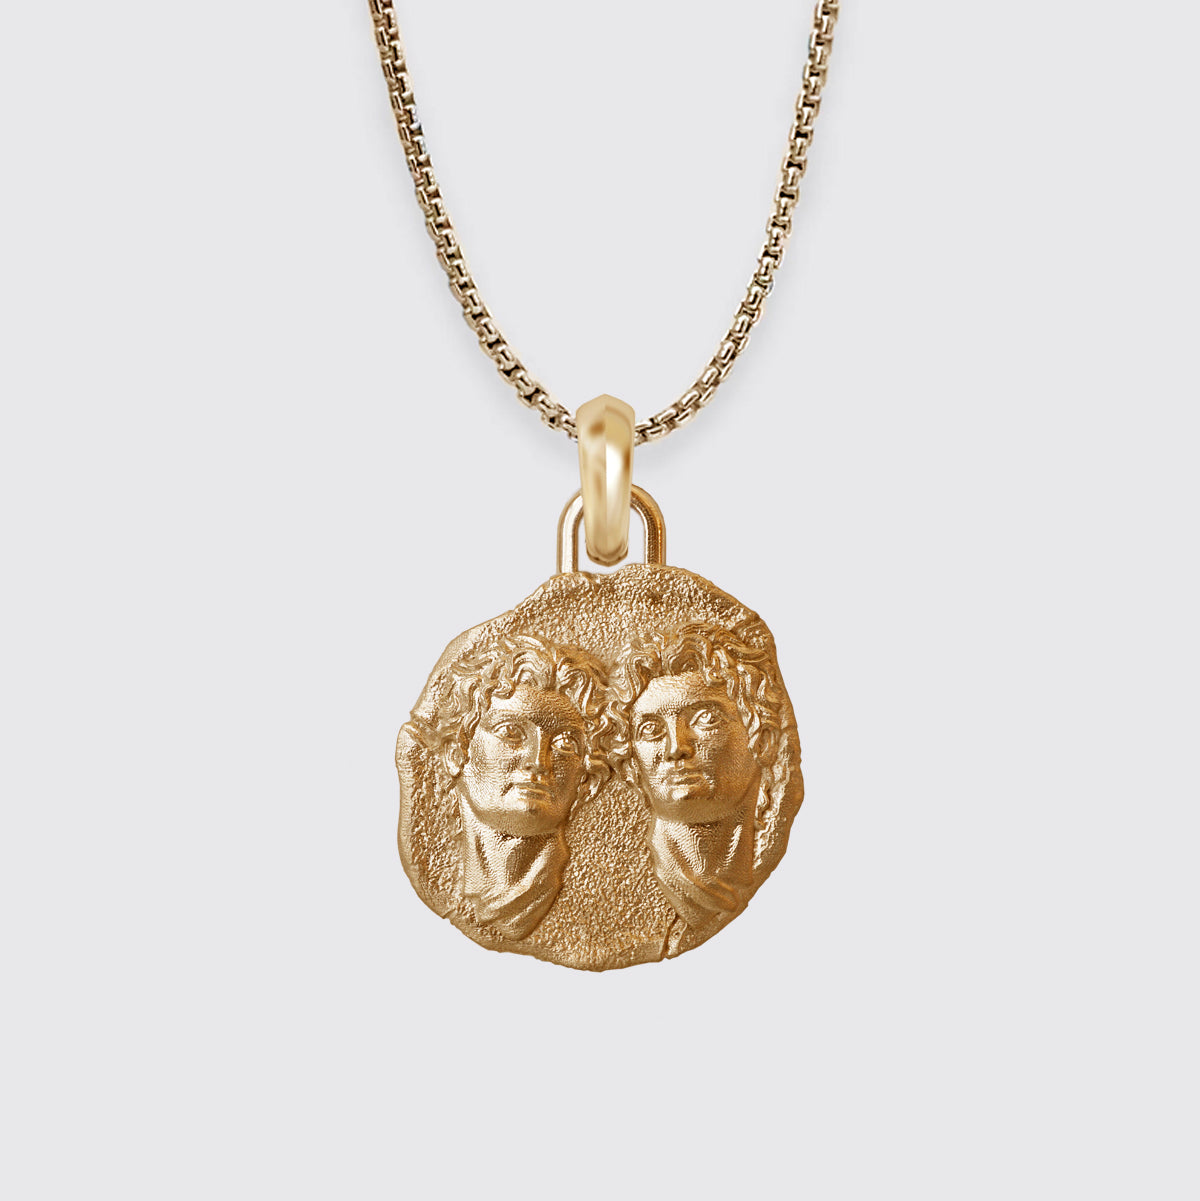 Gemini Zodiac Pendant in Sterling Silver and 14K Gold